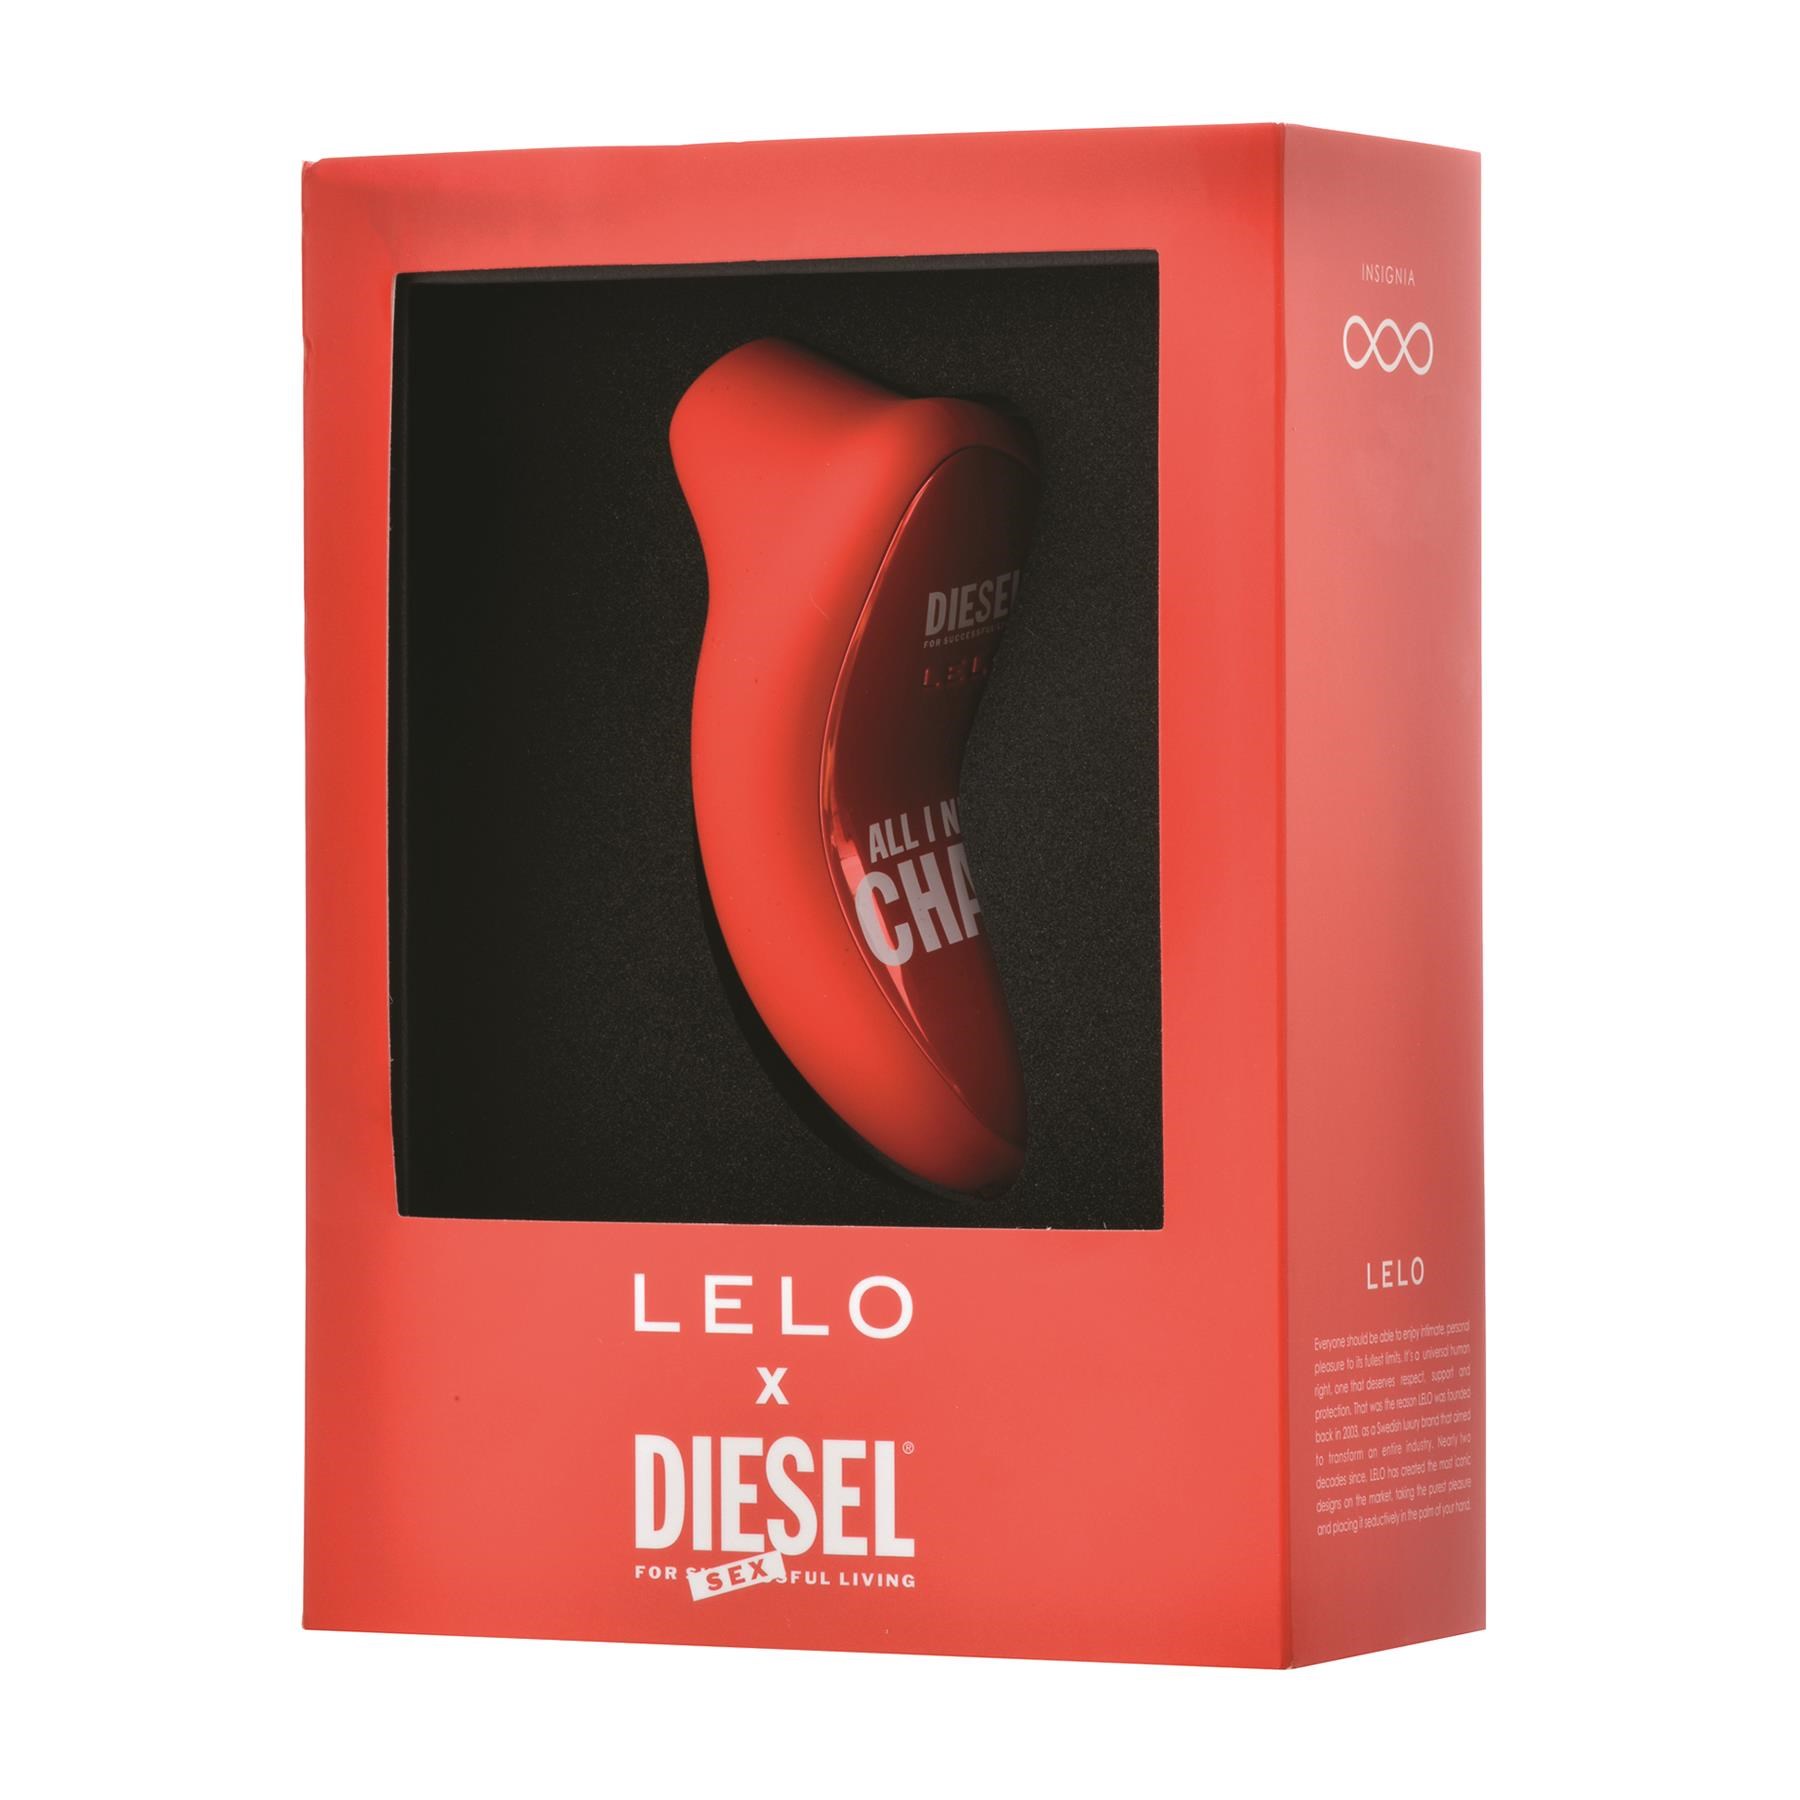 Lelo Sona Cruise Clitoral Stimulator - Diesel Edition - Packaging Shot